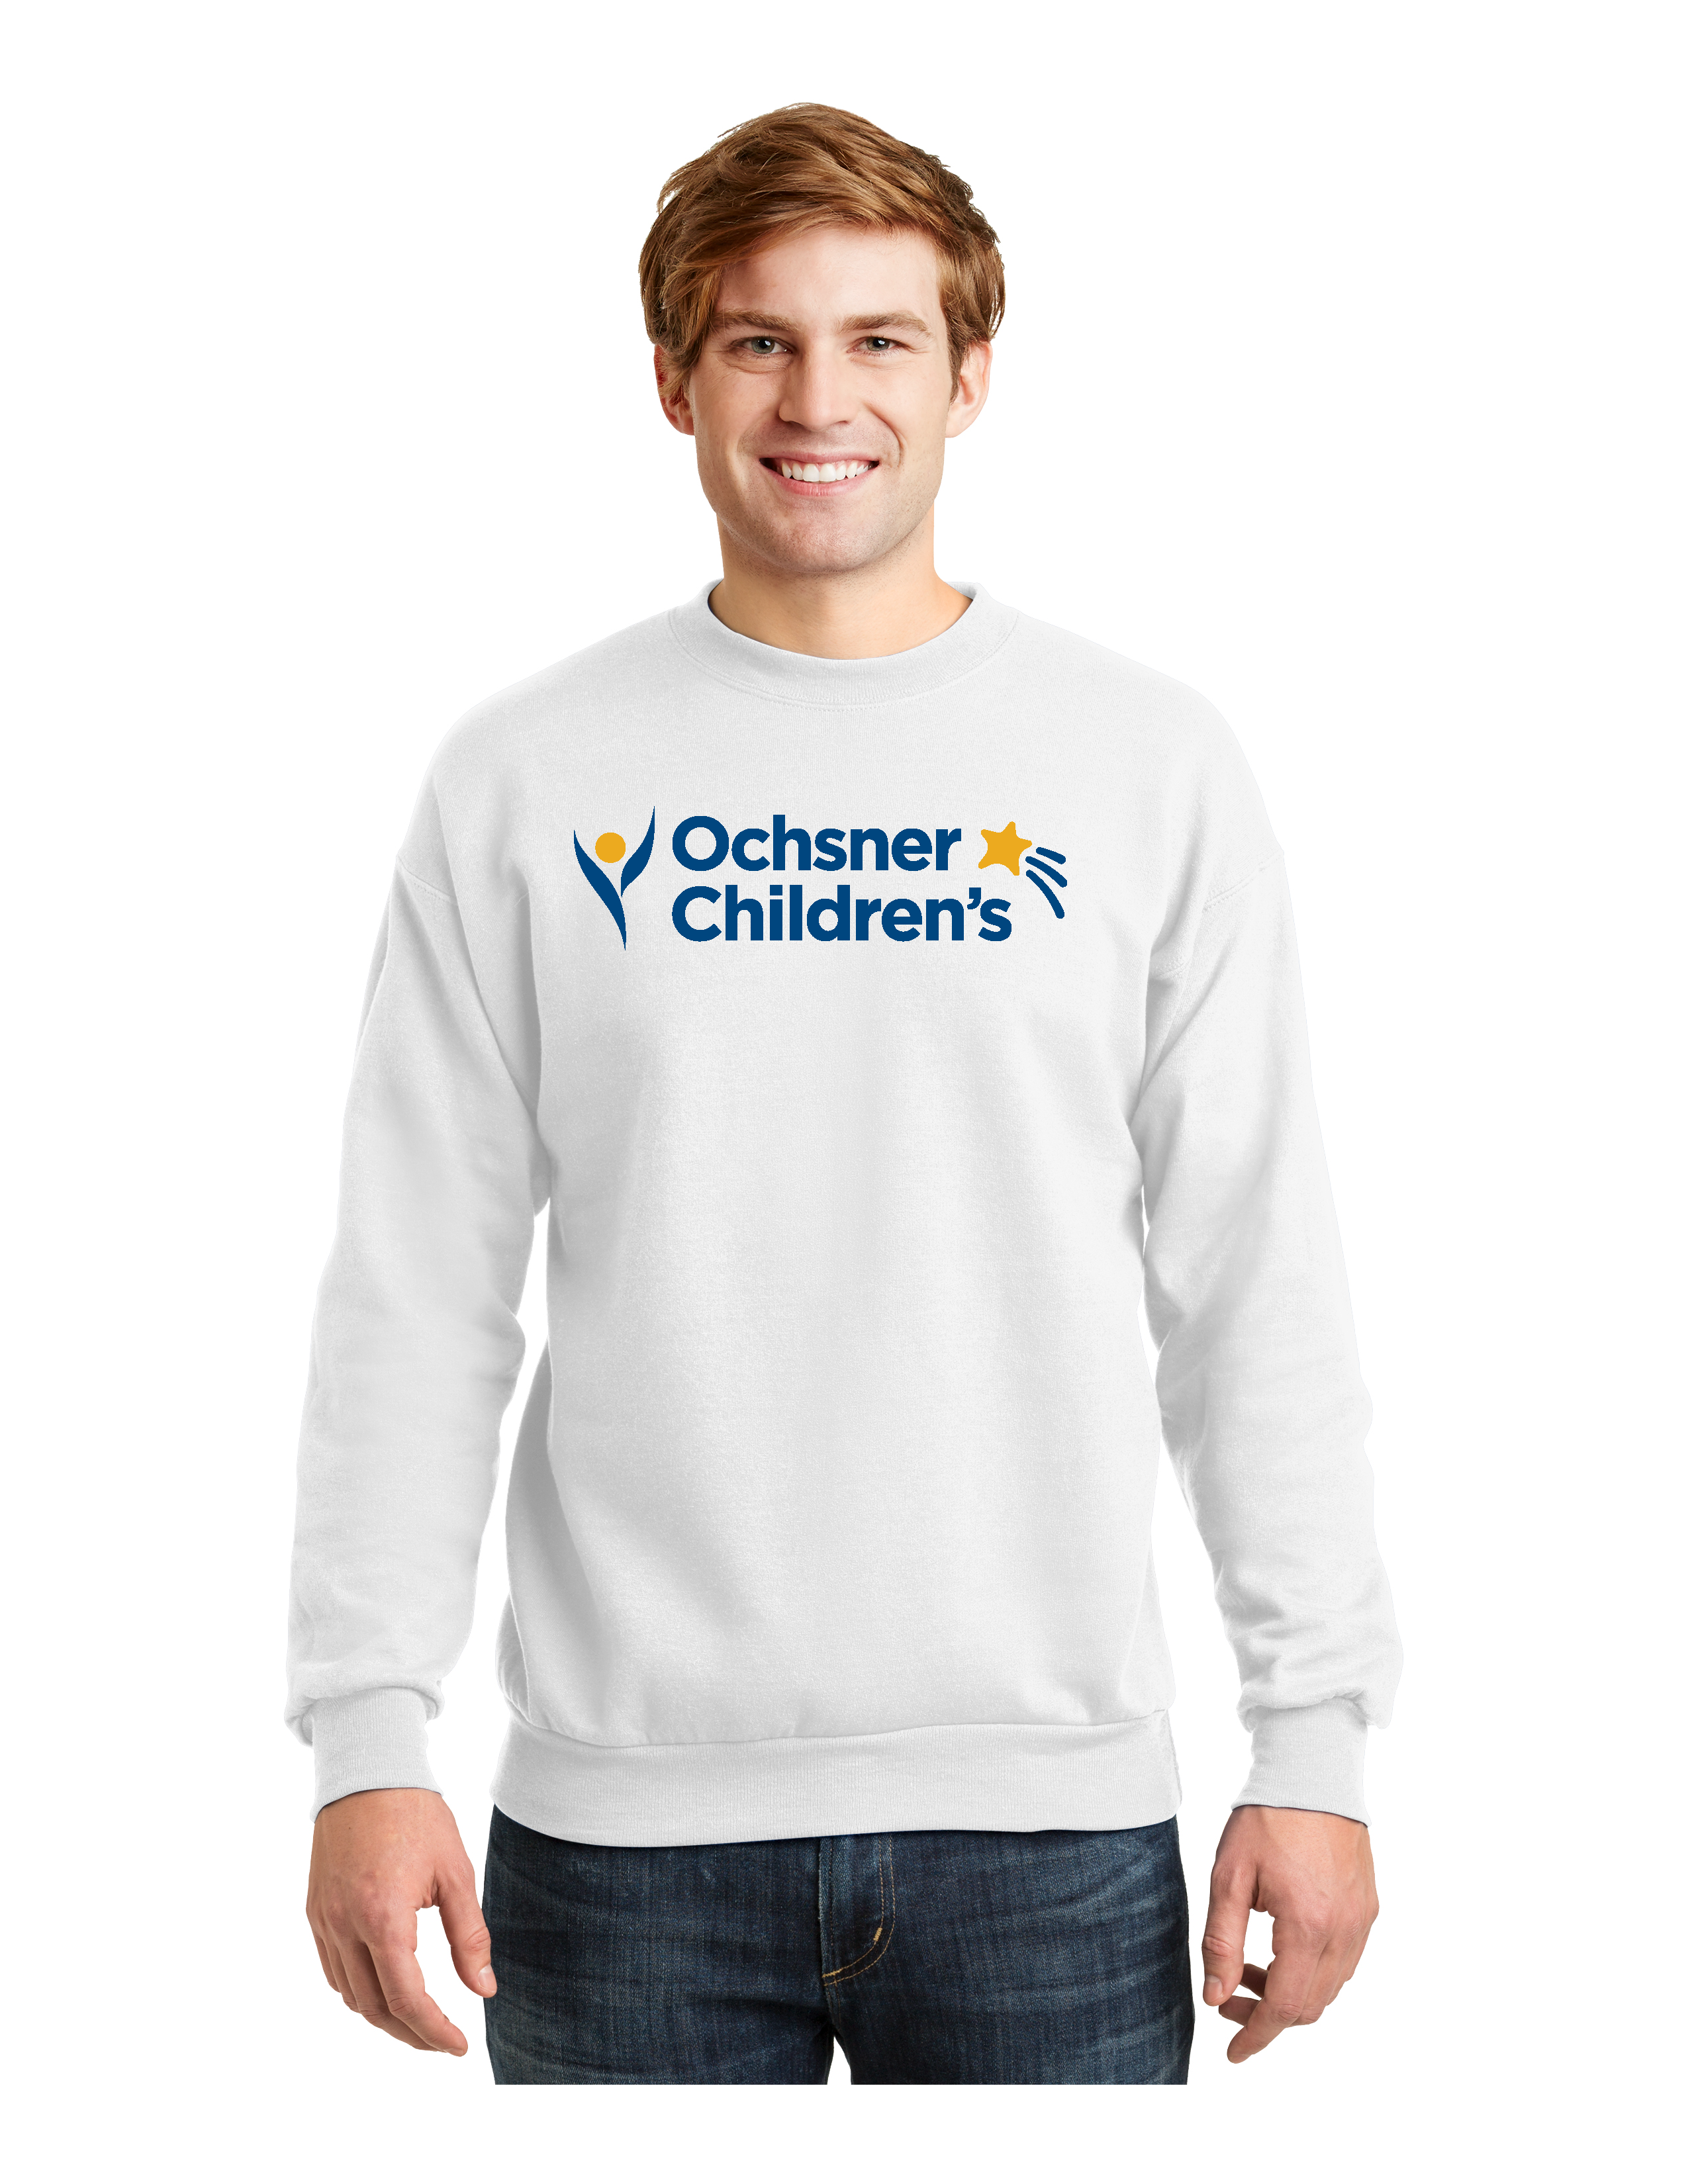 Ochsner Children's Screen-Print Sweatshirt, White, large image number 1